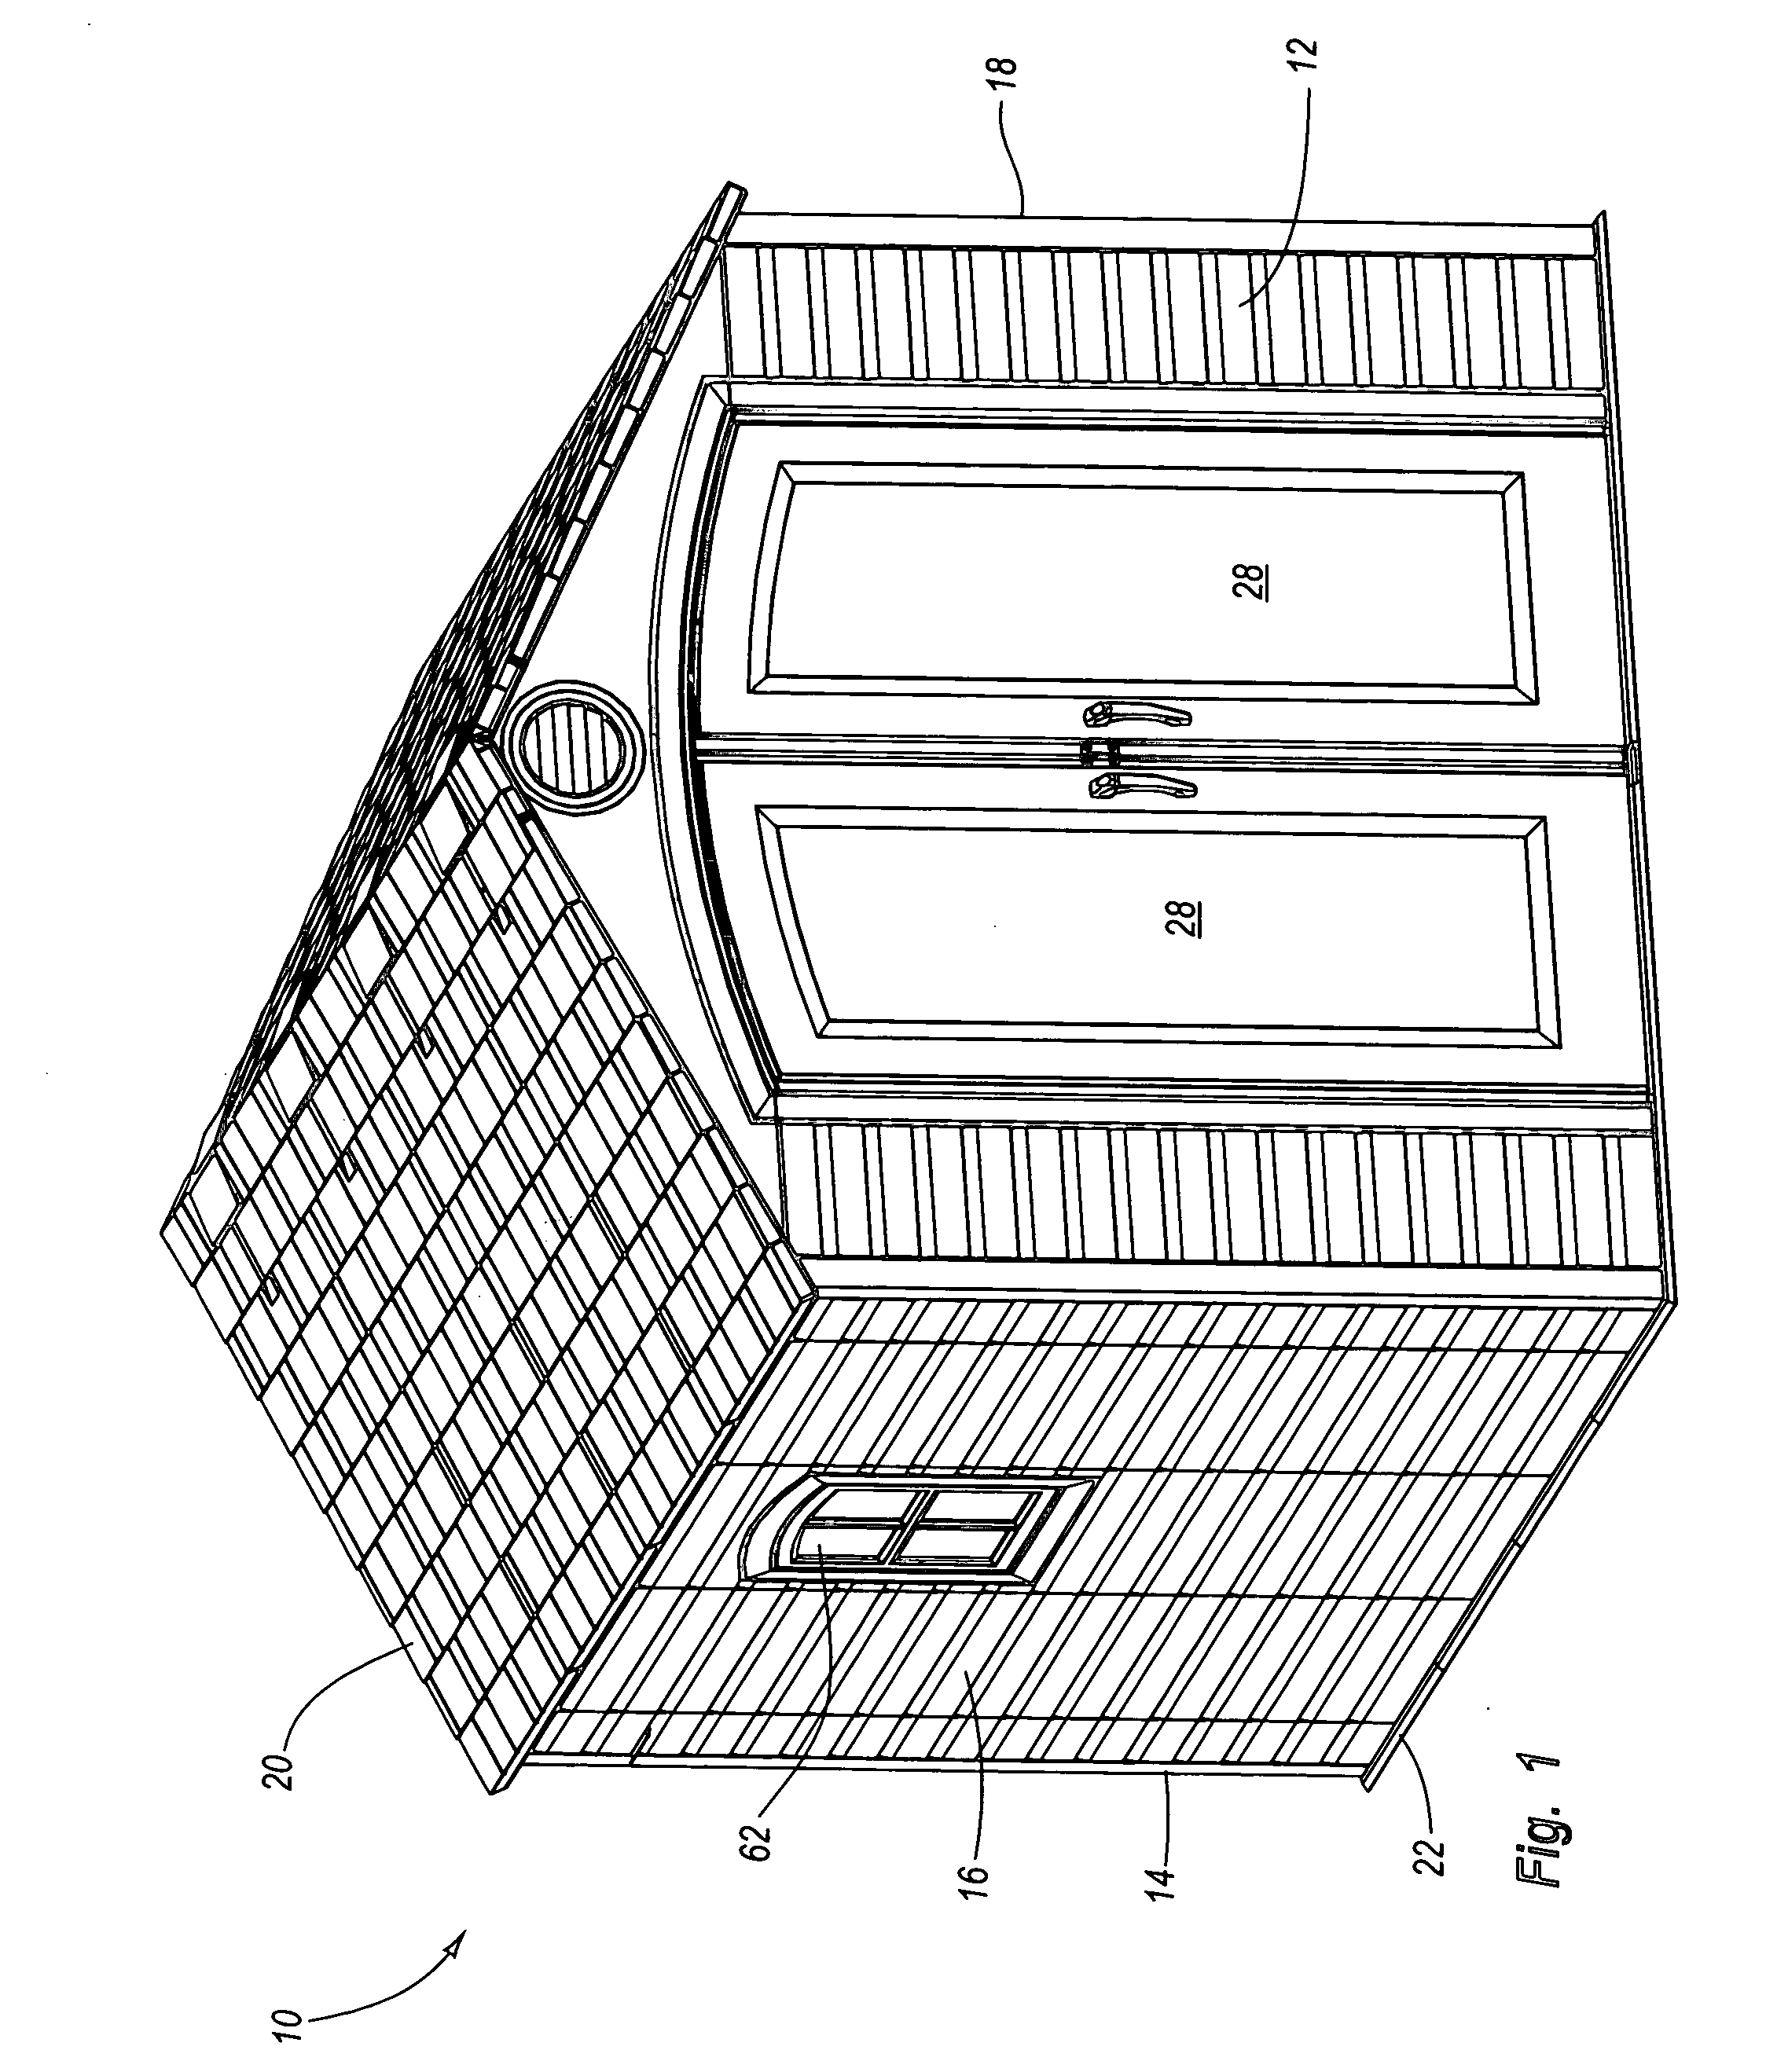 Modular enclosure with offset panels